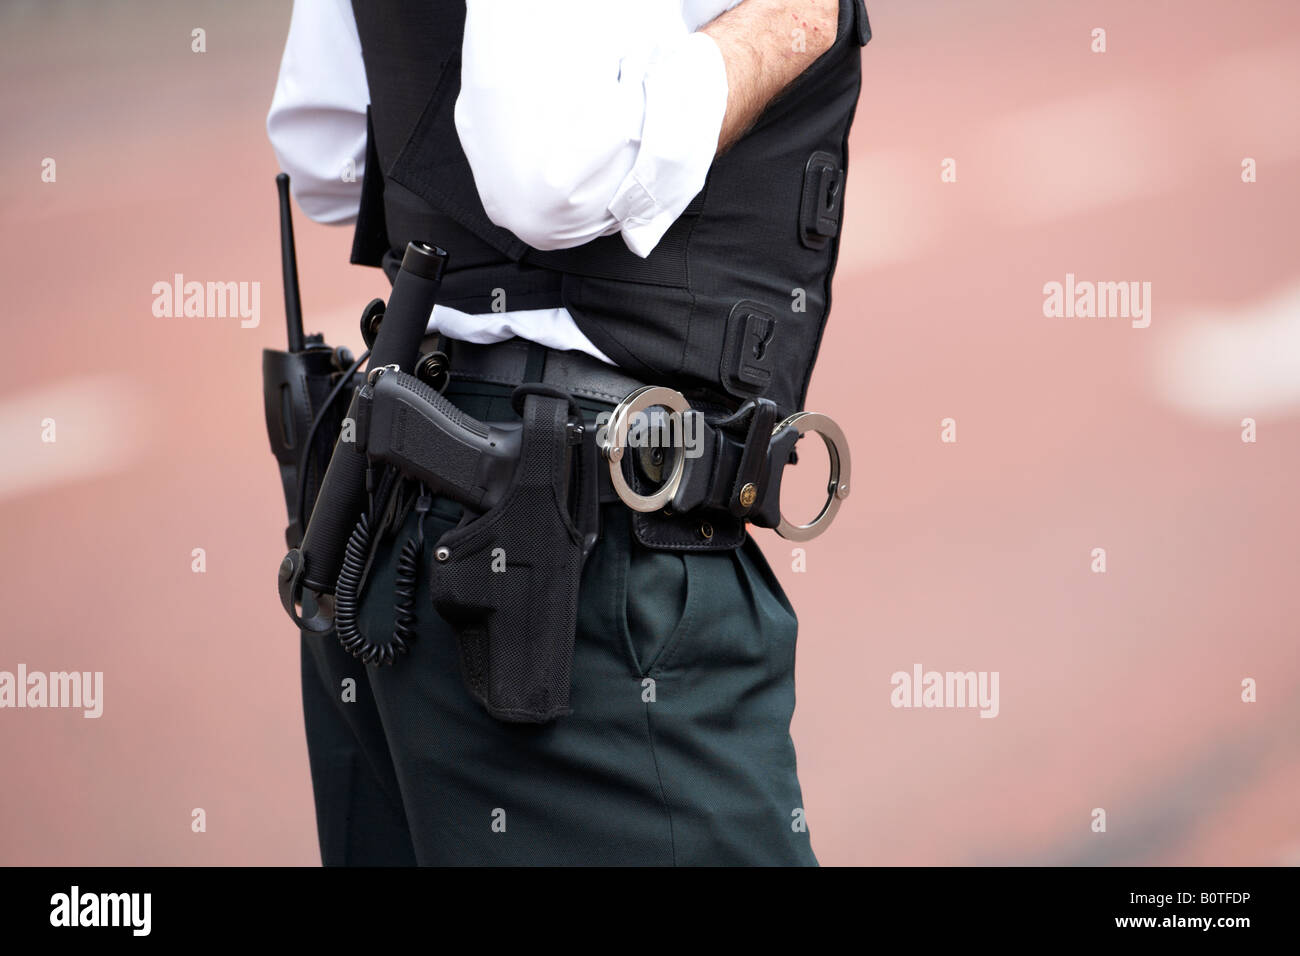 https://c8.alamy.com/comp/B0TFDP/psni-police-service-northern-ireland-officer-wearing-utility-belt-B0TFDP.jpg